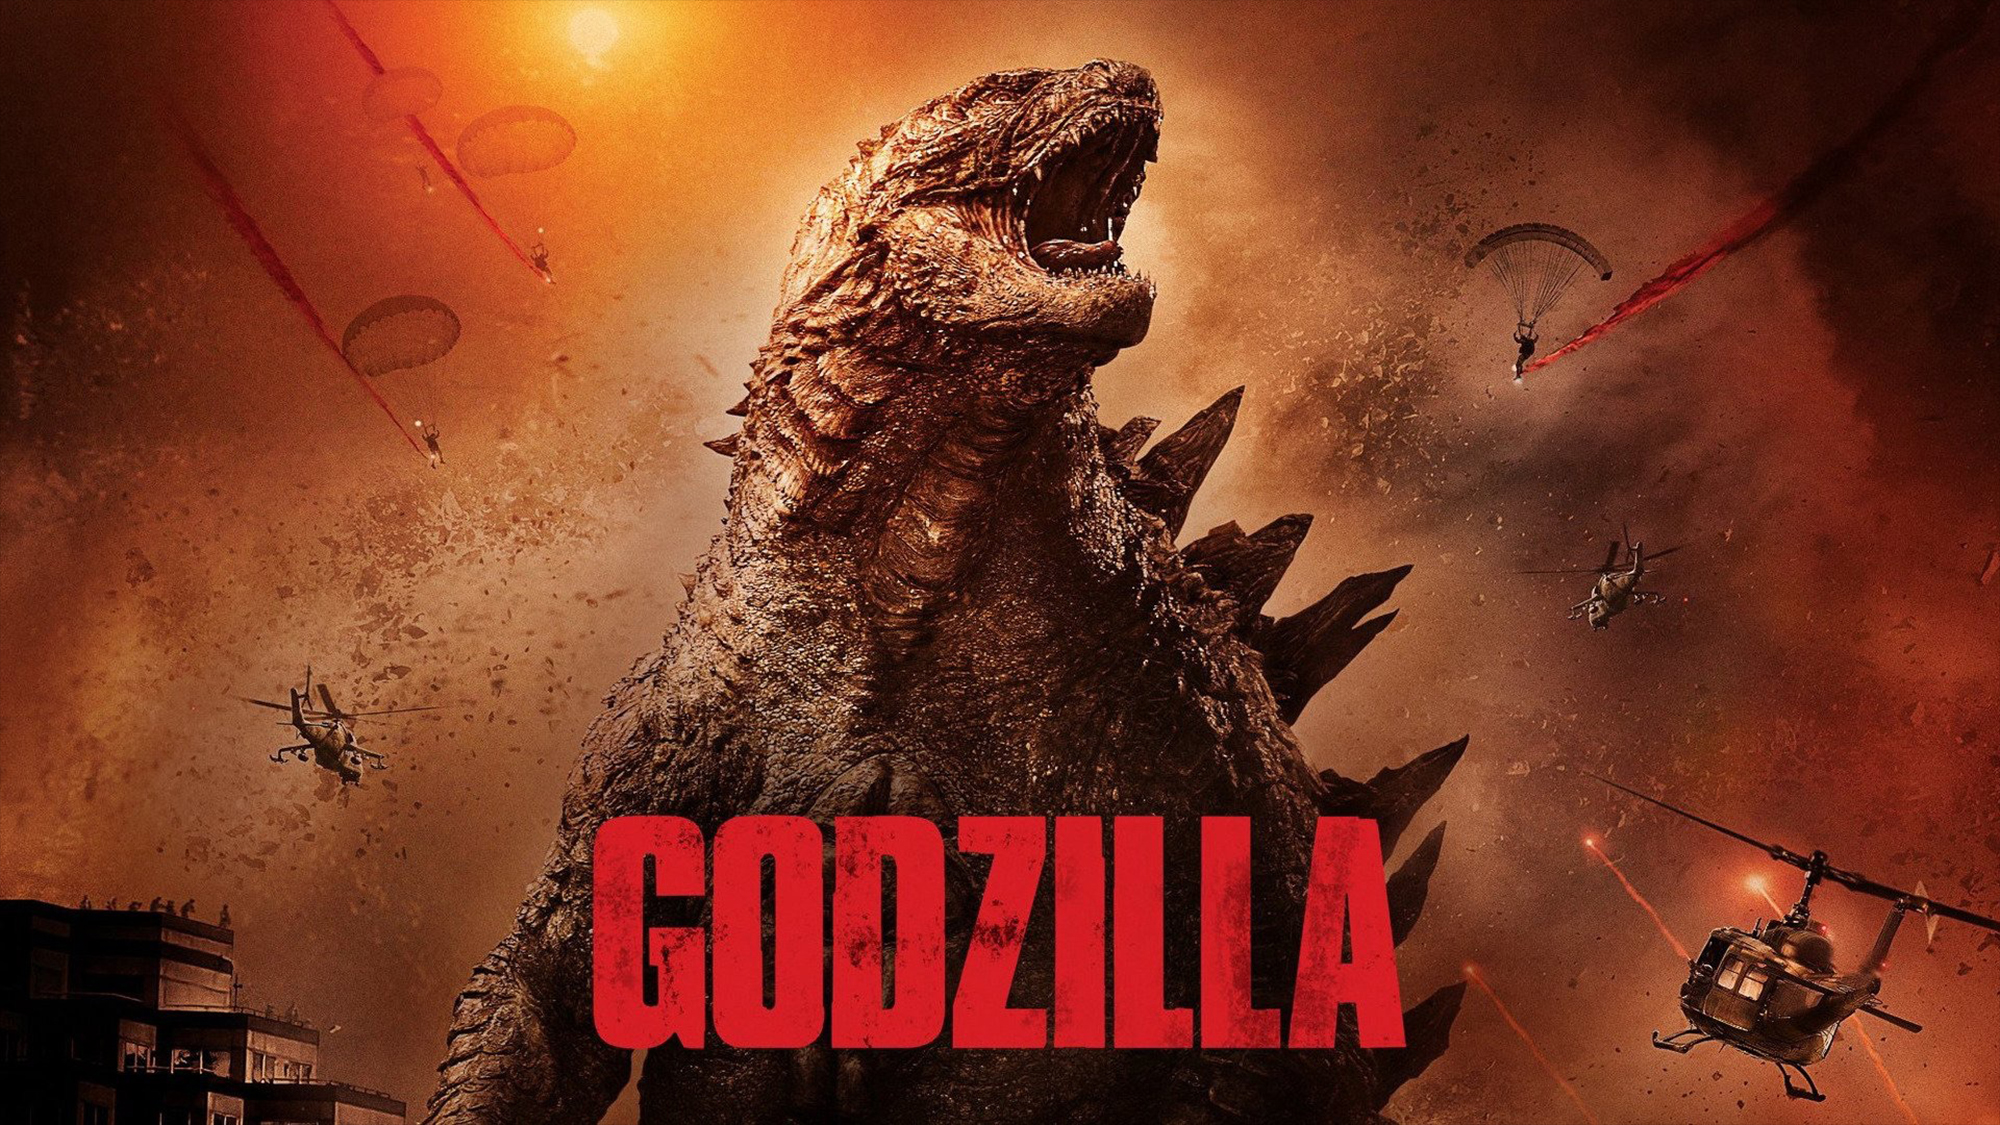 494878 télécharger l'image godzilla (2014), film, godzilla (monsterverse), godzilla - fonds d'écran et économiseurs d'écran gratuits